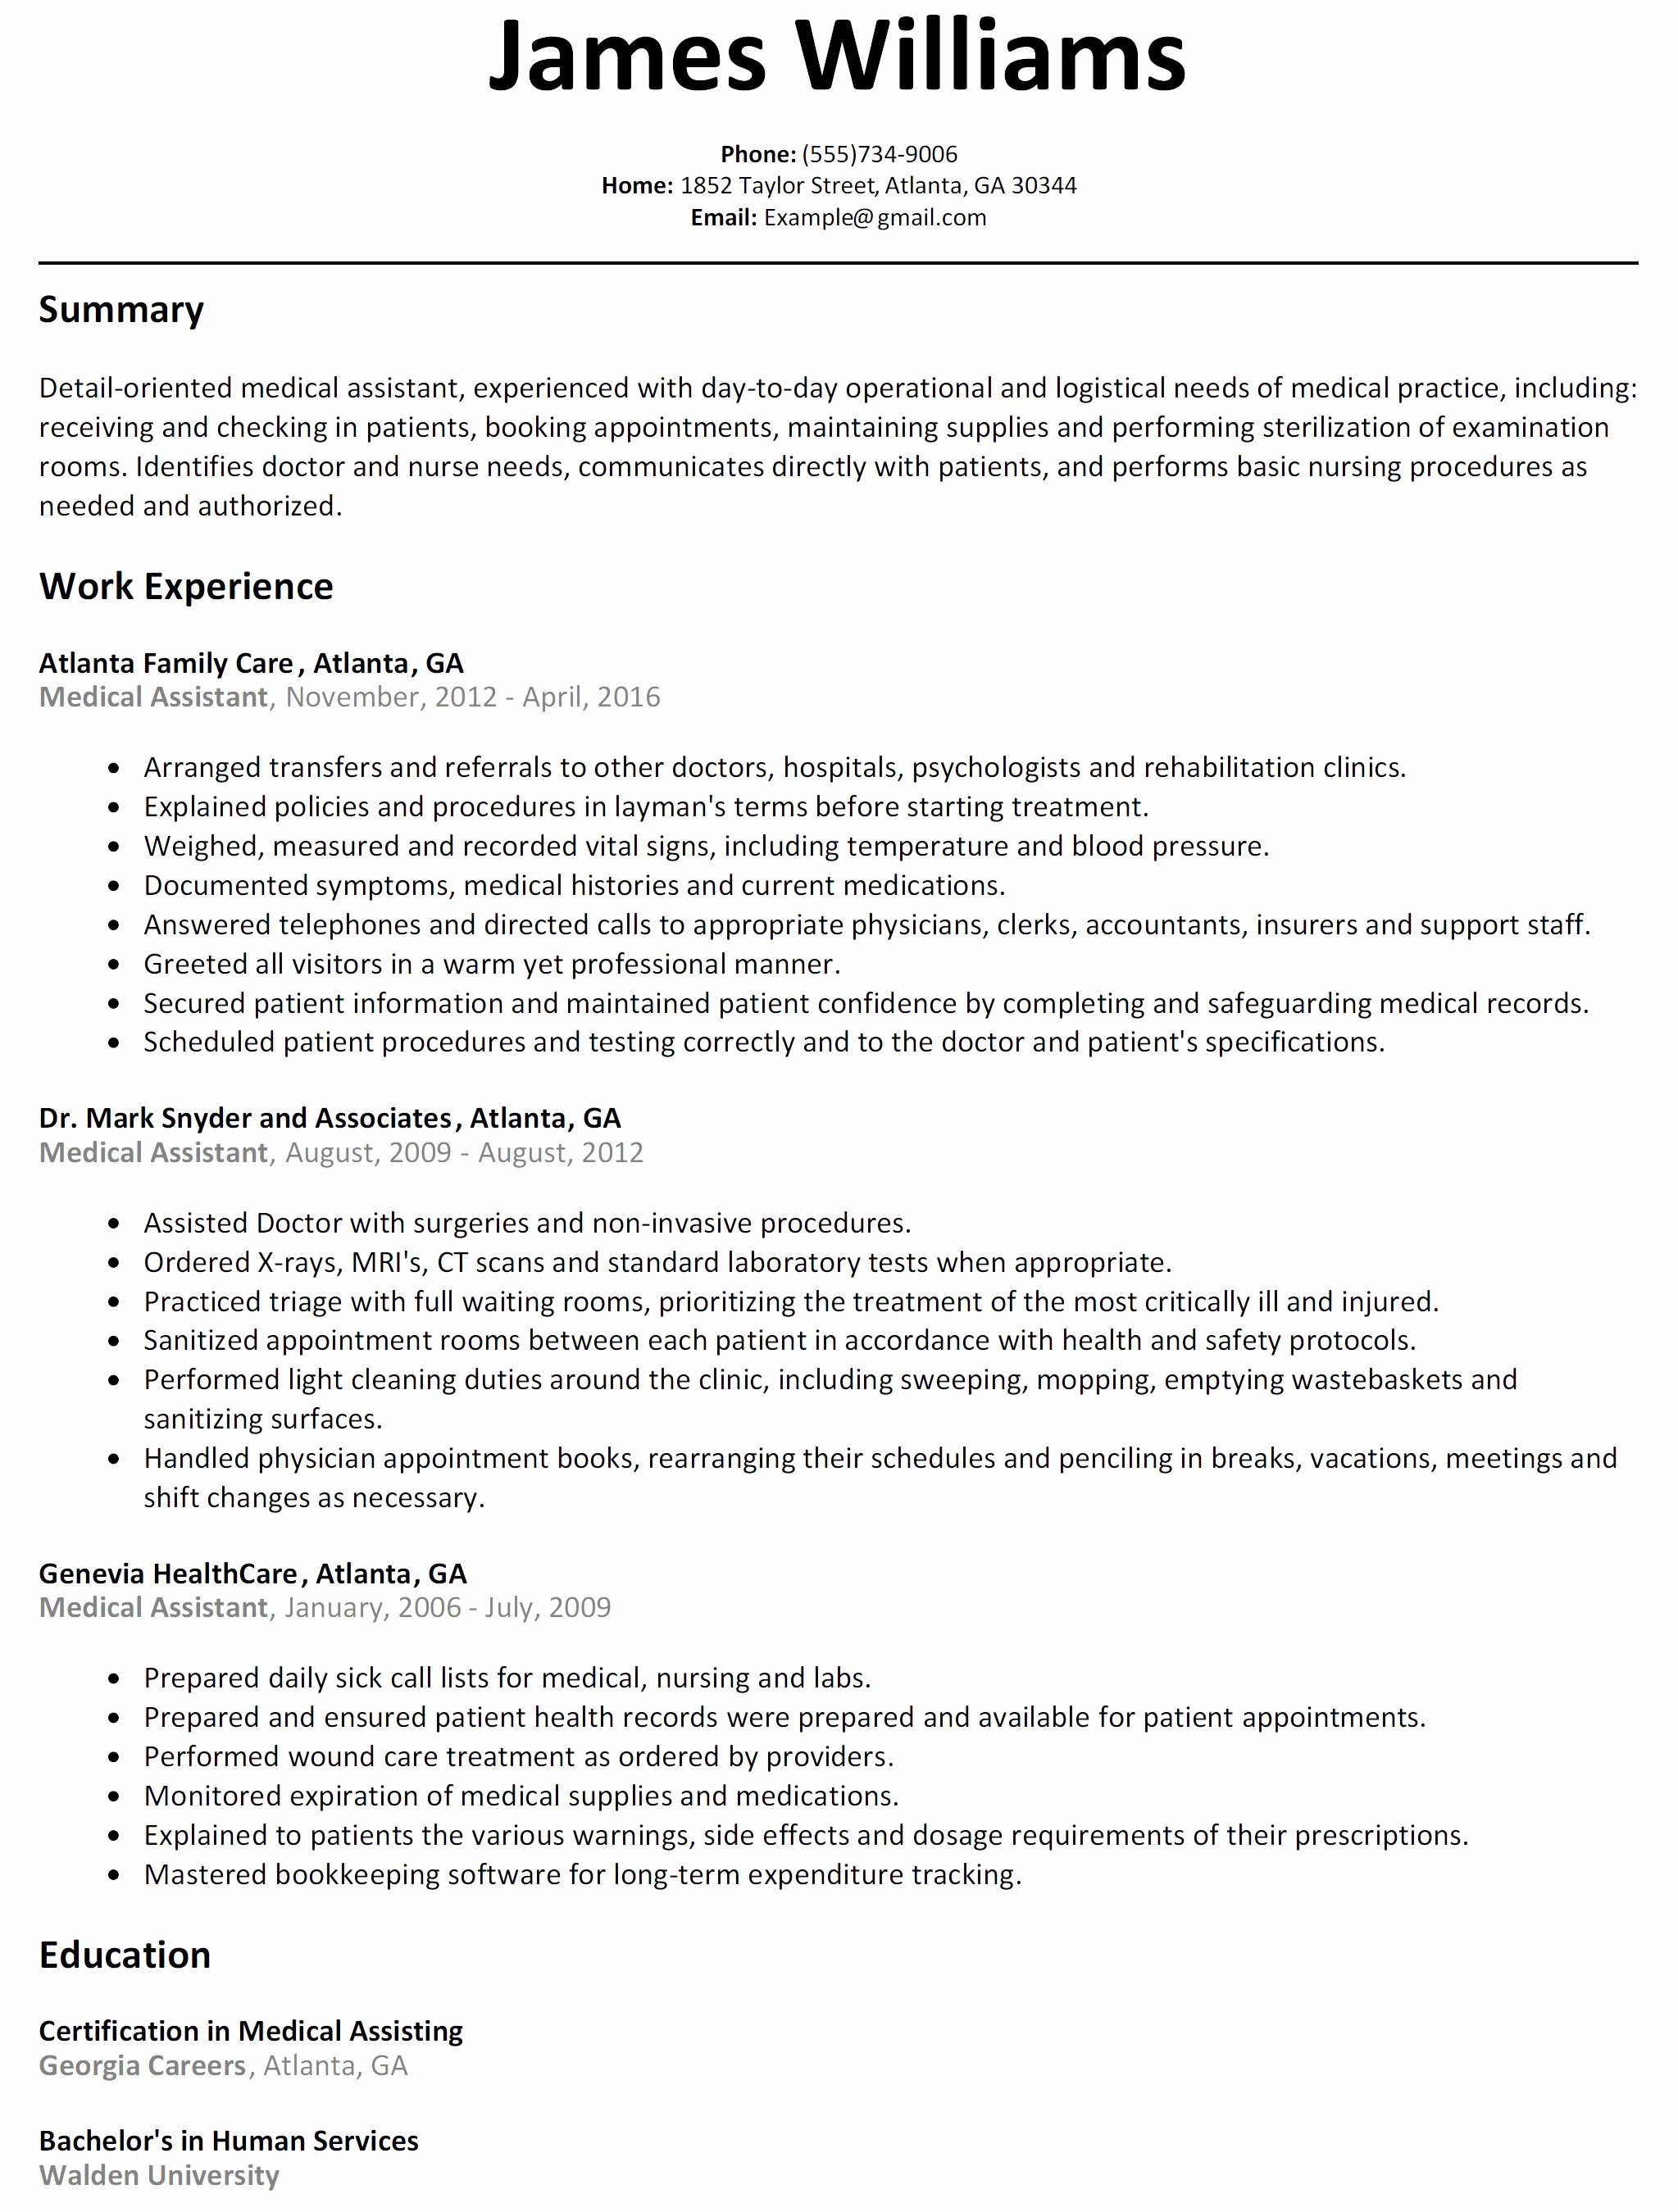 Best Resume Format Cool Resume Templates For Microsoft Word Fresh Sample Resume Formats